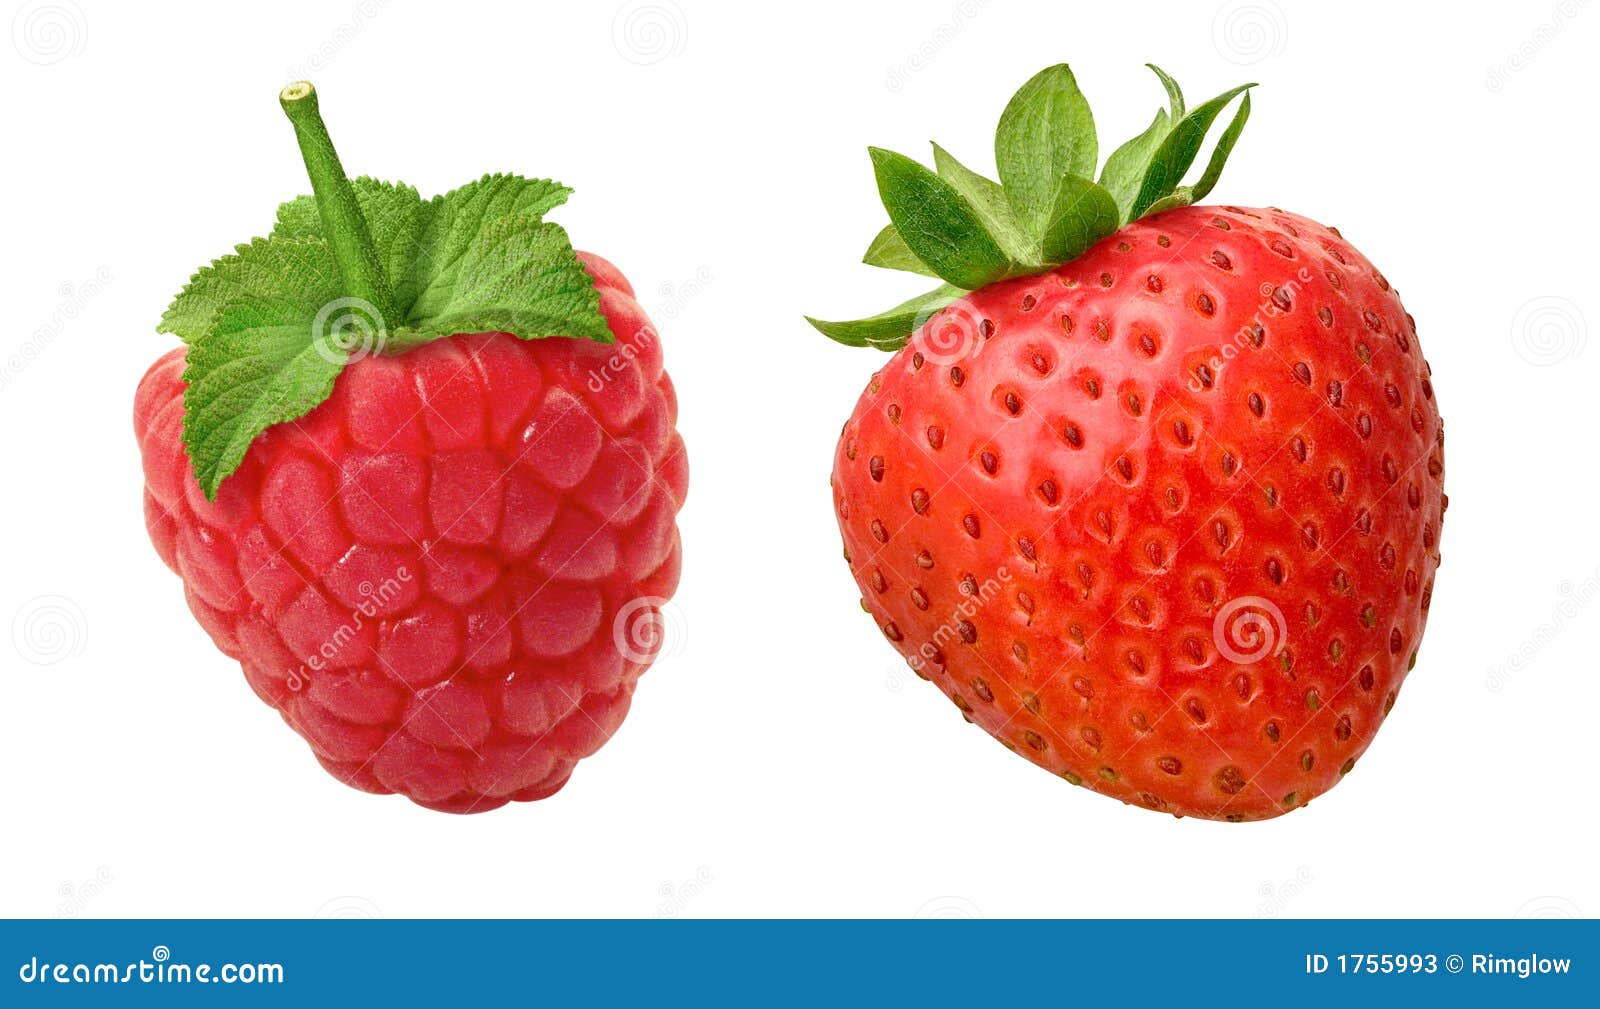 raspberry strawberry